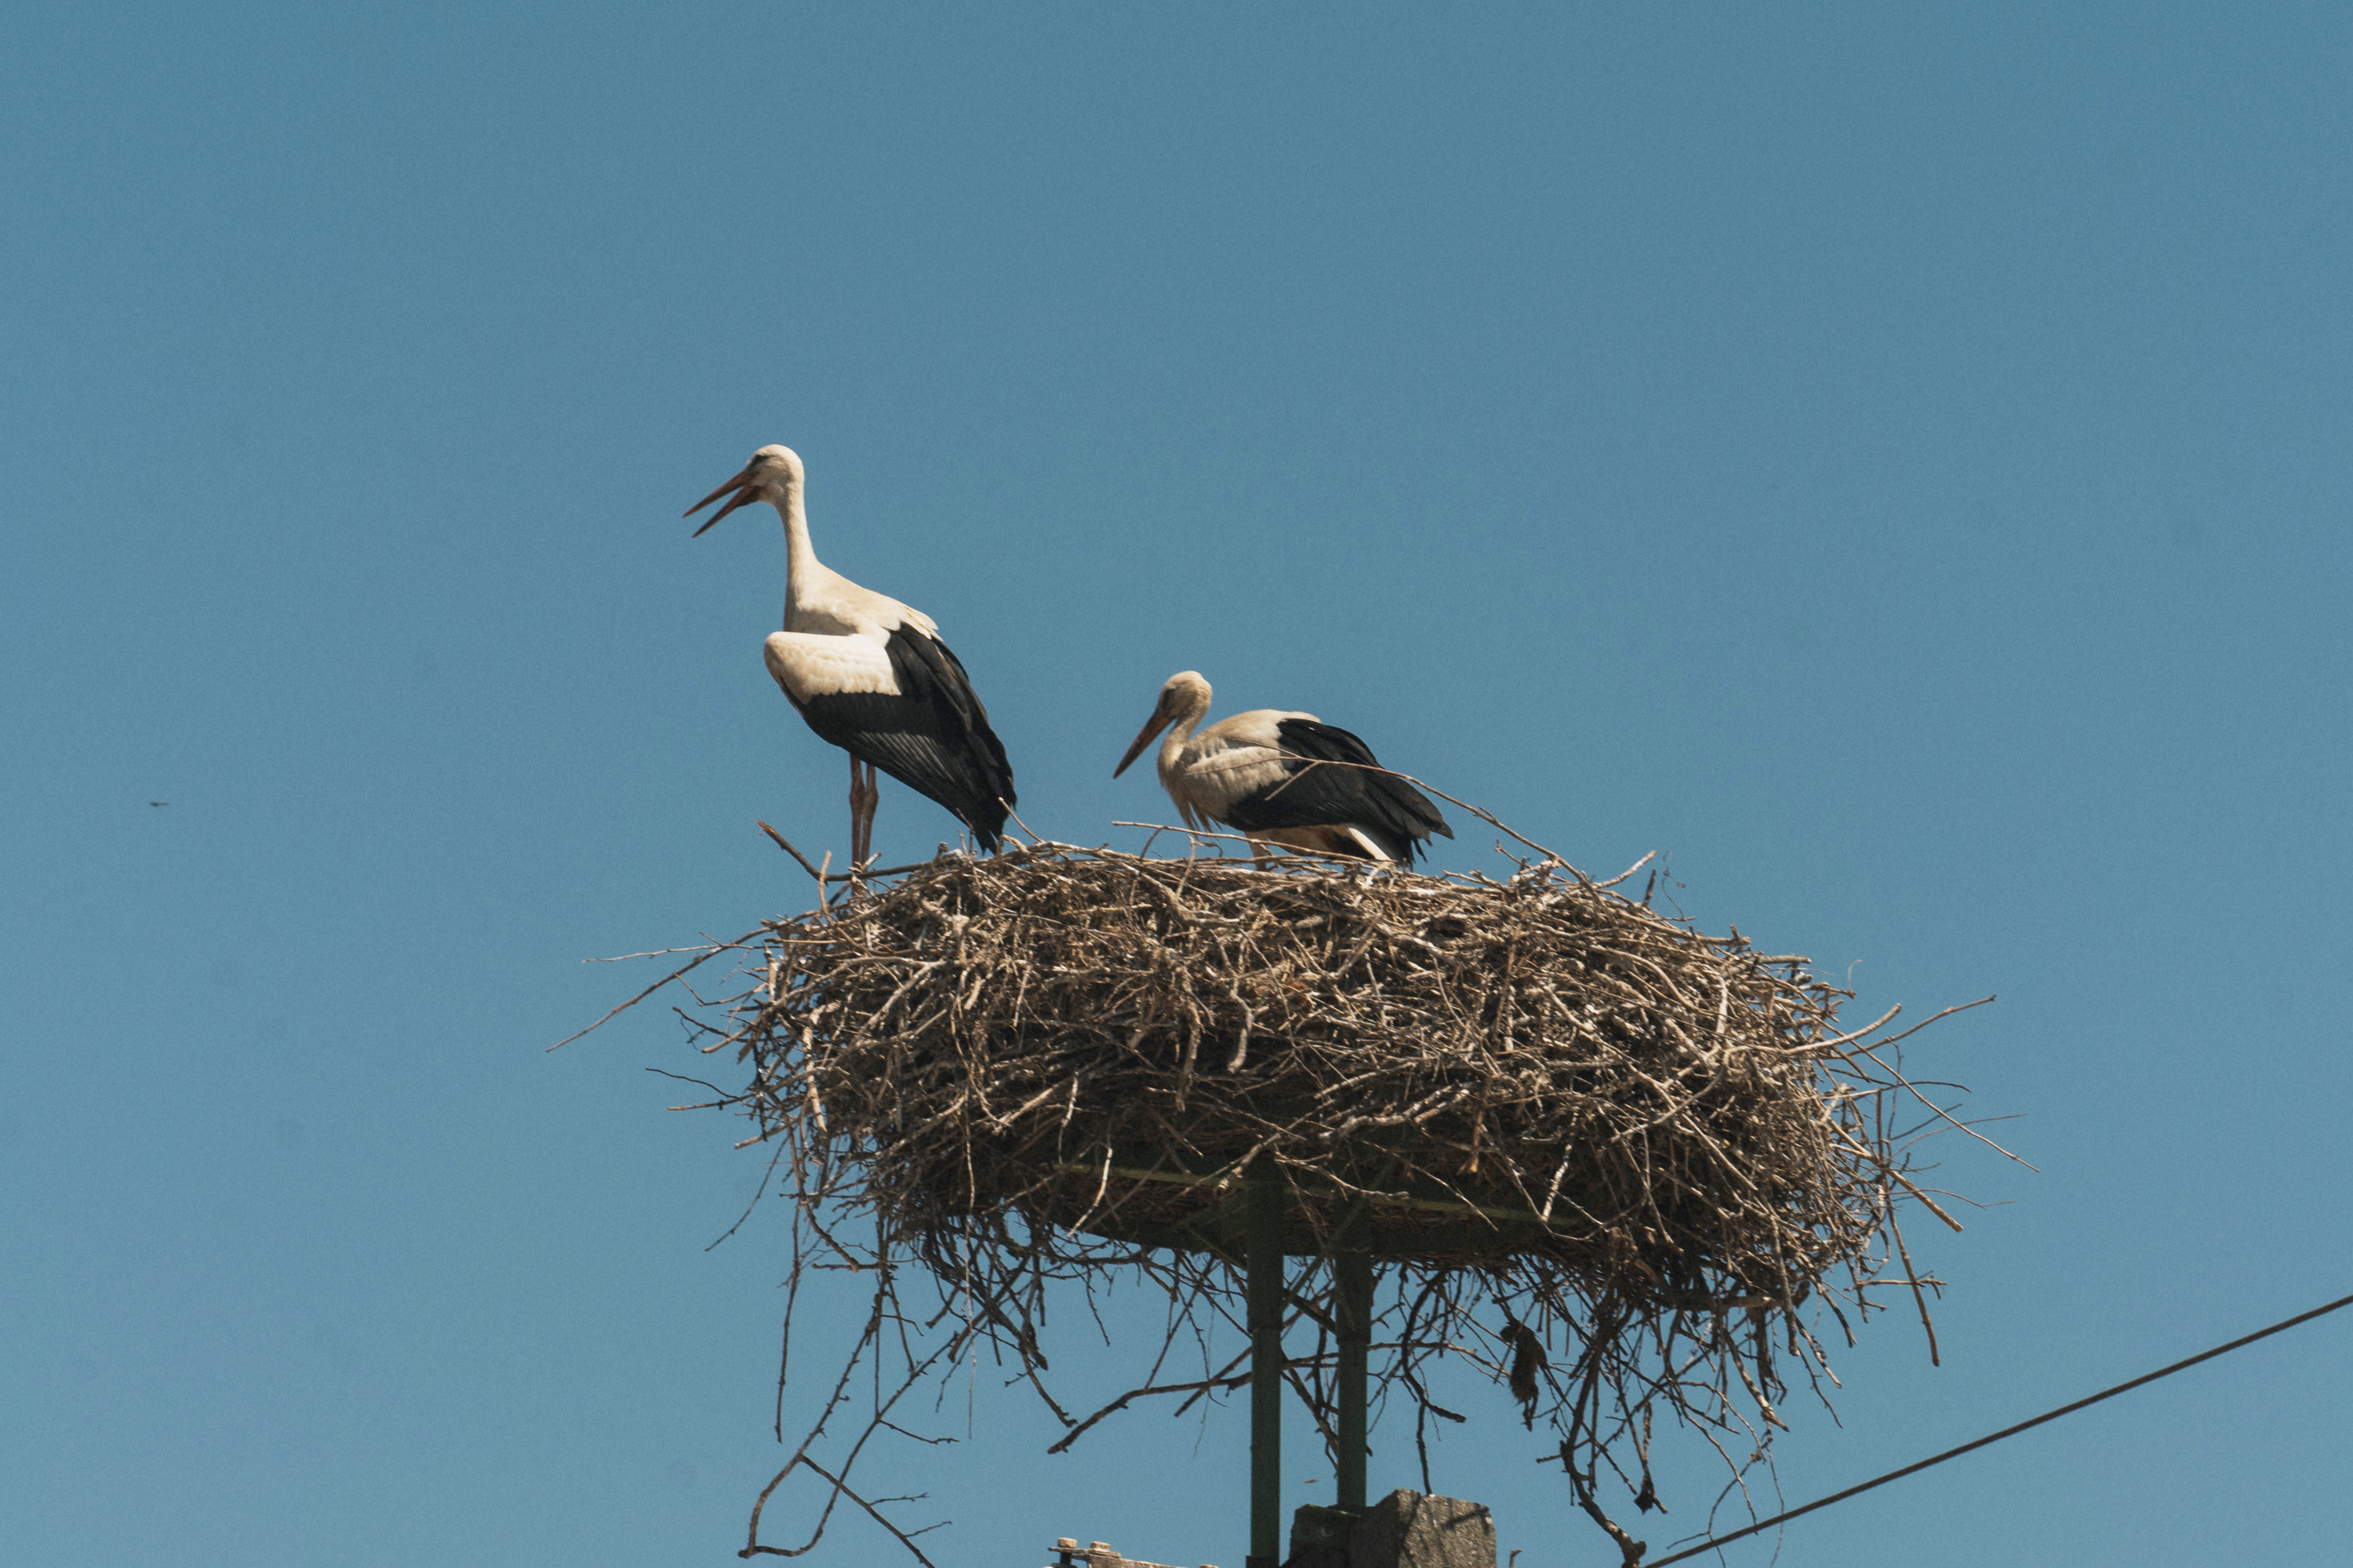 Philip the stork - stork nests